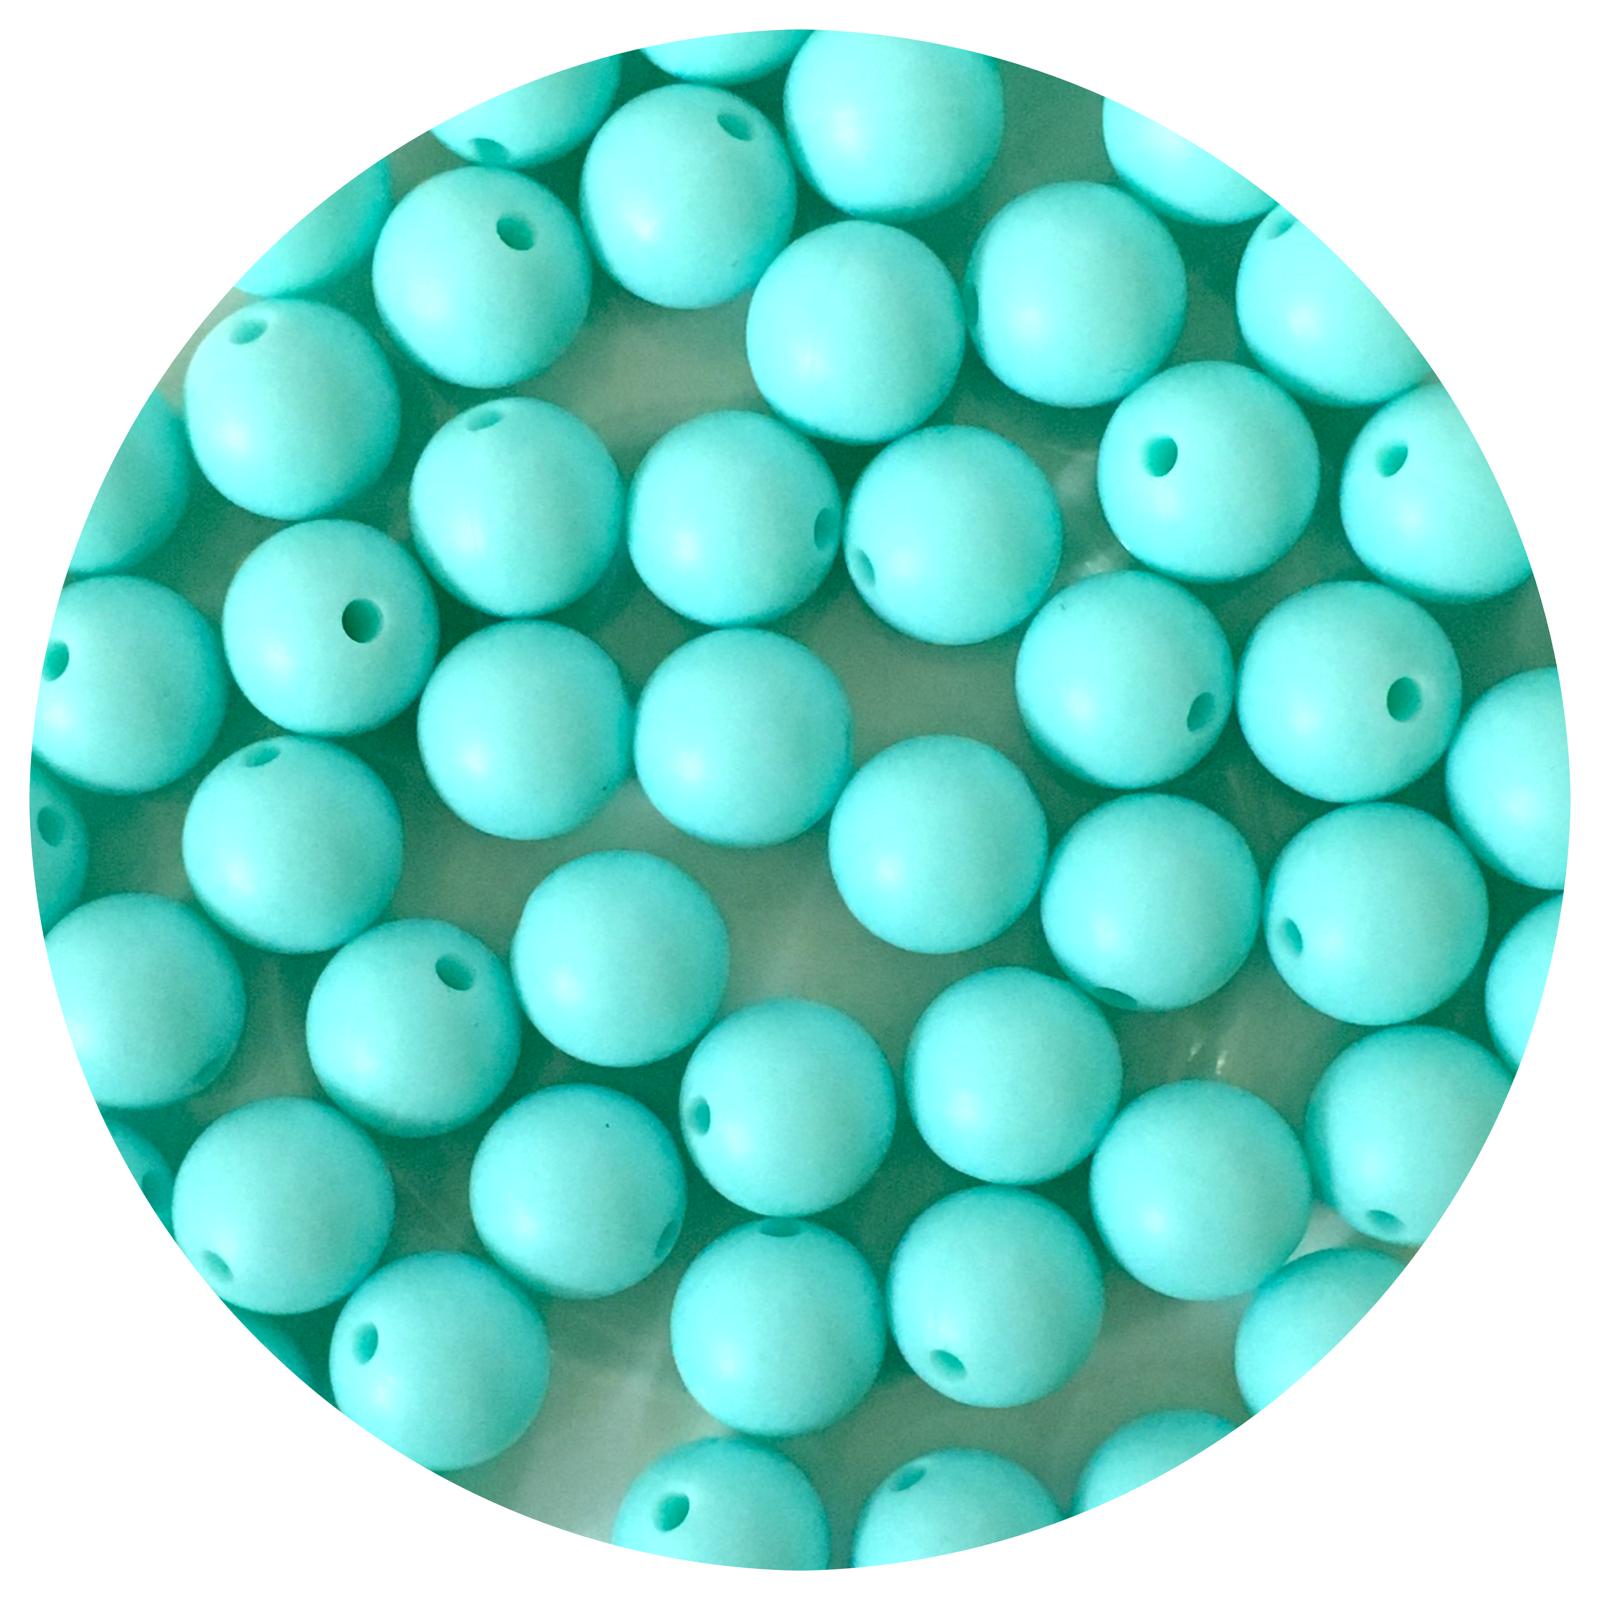 Aqua - 12mm Round Silicone Beads - 10 beads